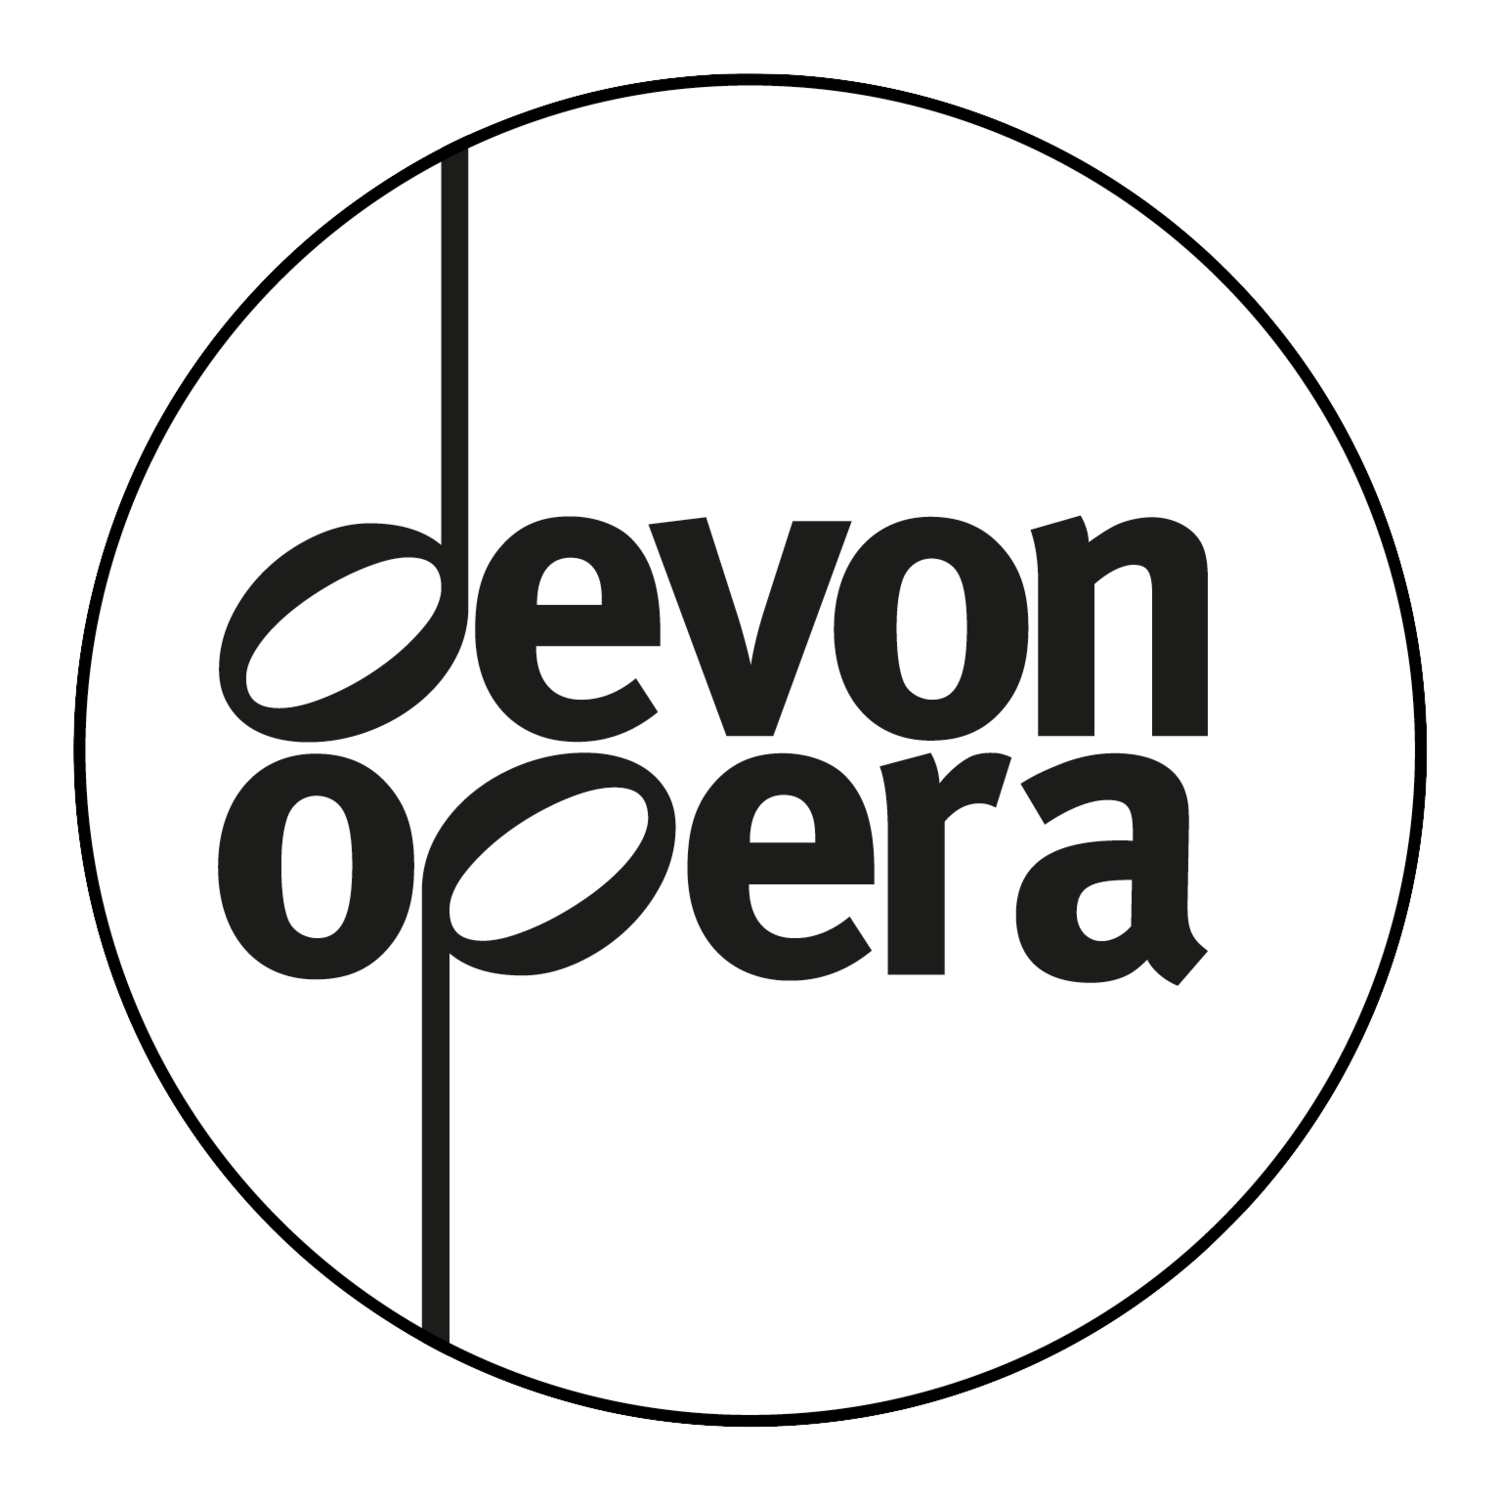 Devon Opera